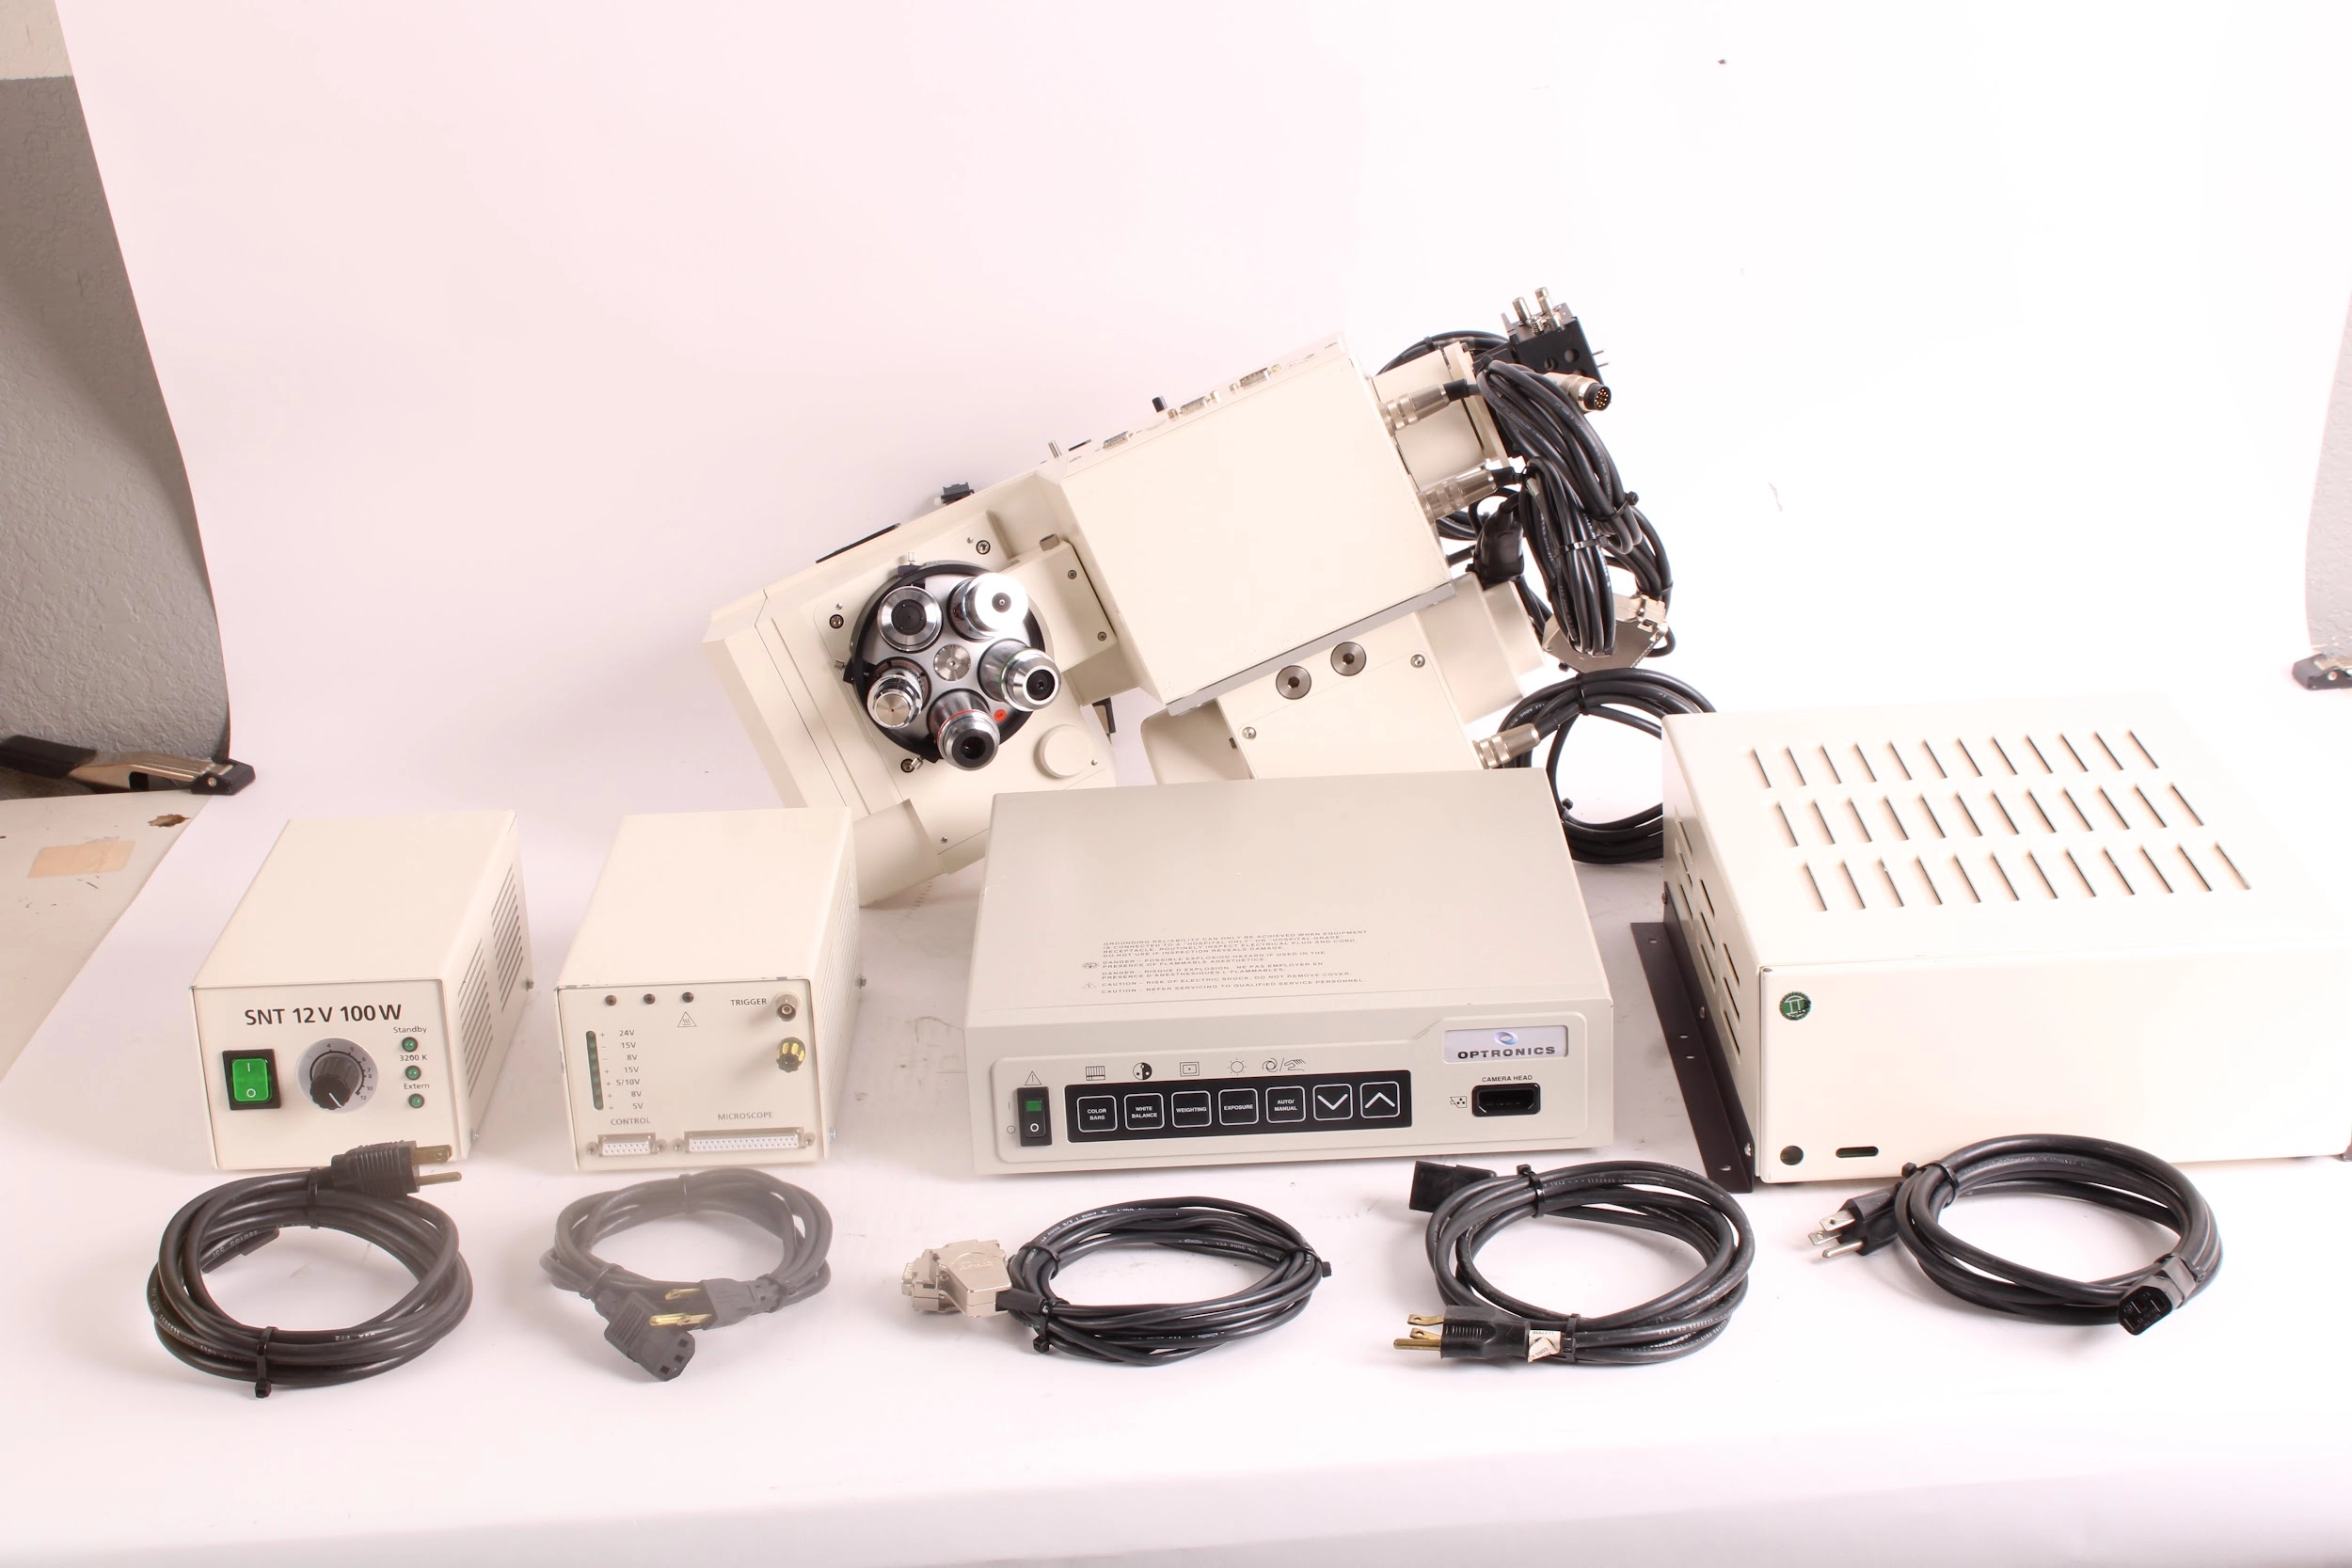 Carl Zeiss MEG Microscope System w/ AF Controller, 5x Epiplan-APOCHROMAT Object.